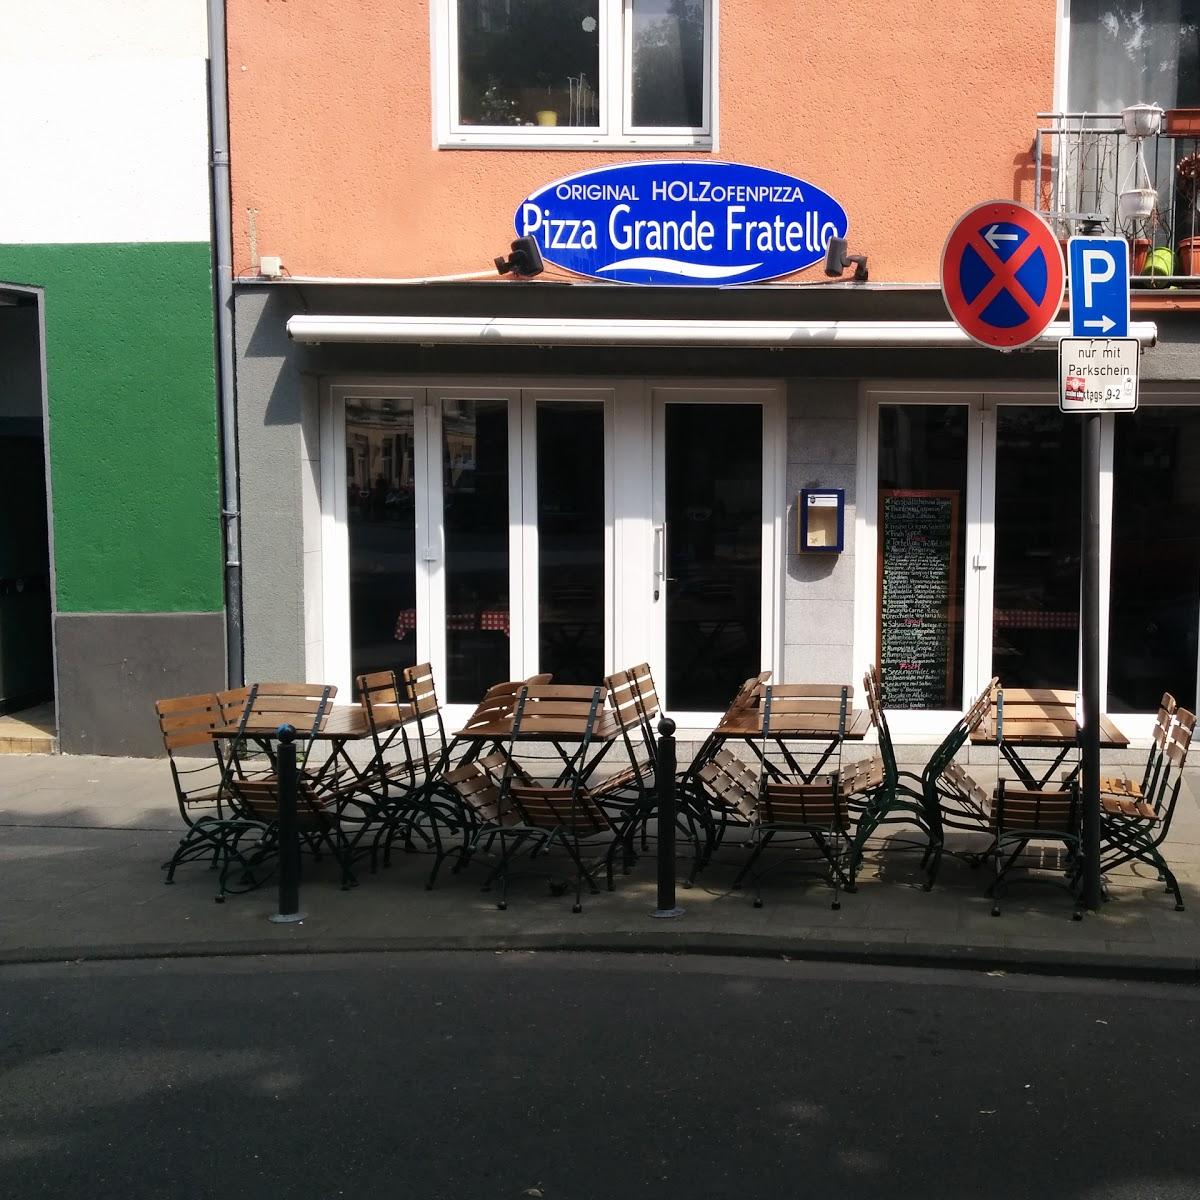 Restaurant "Pizza Grande Fratello" in Köln